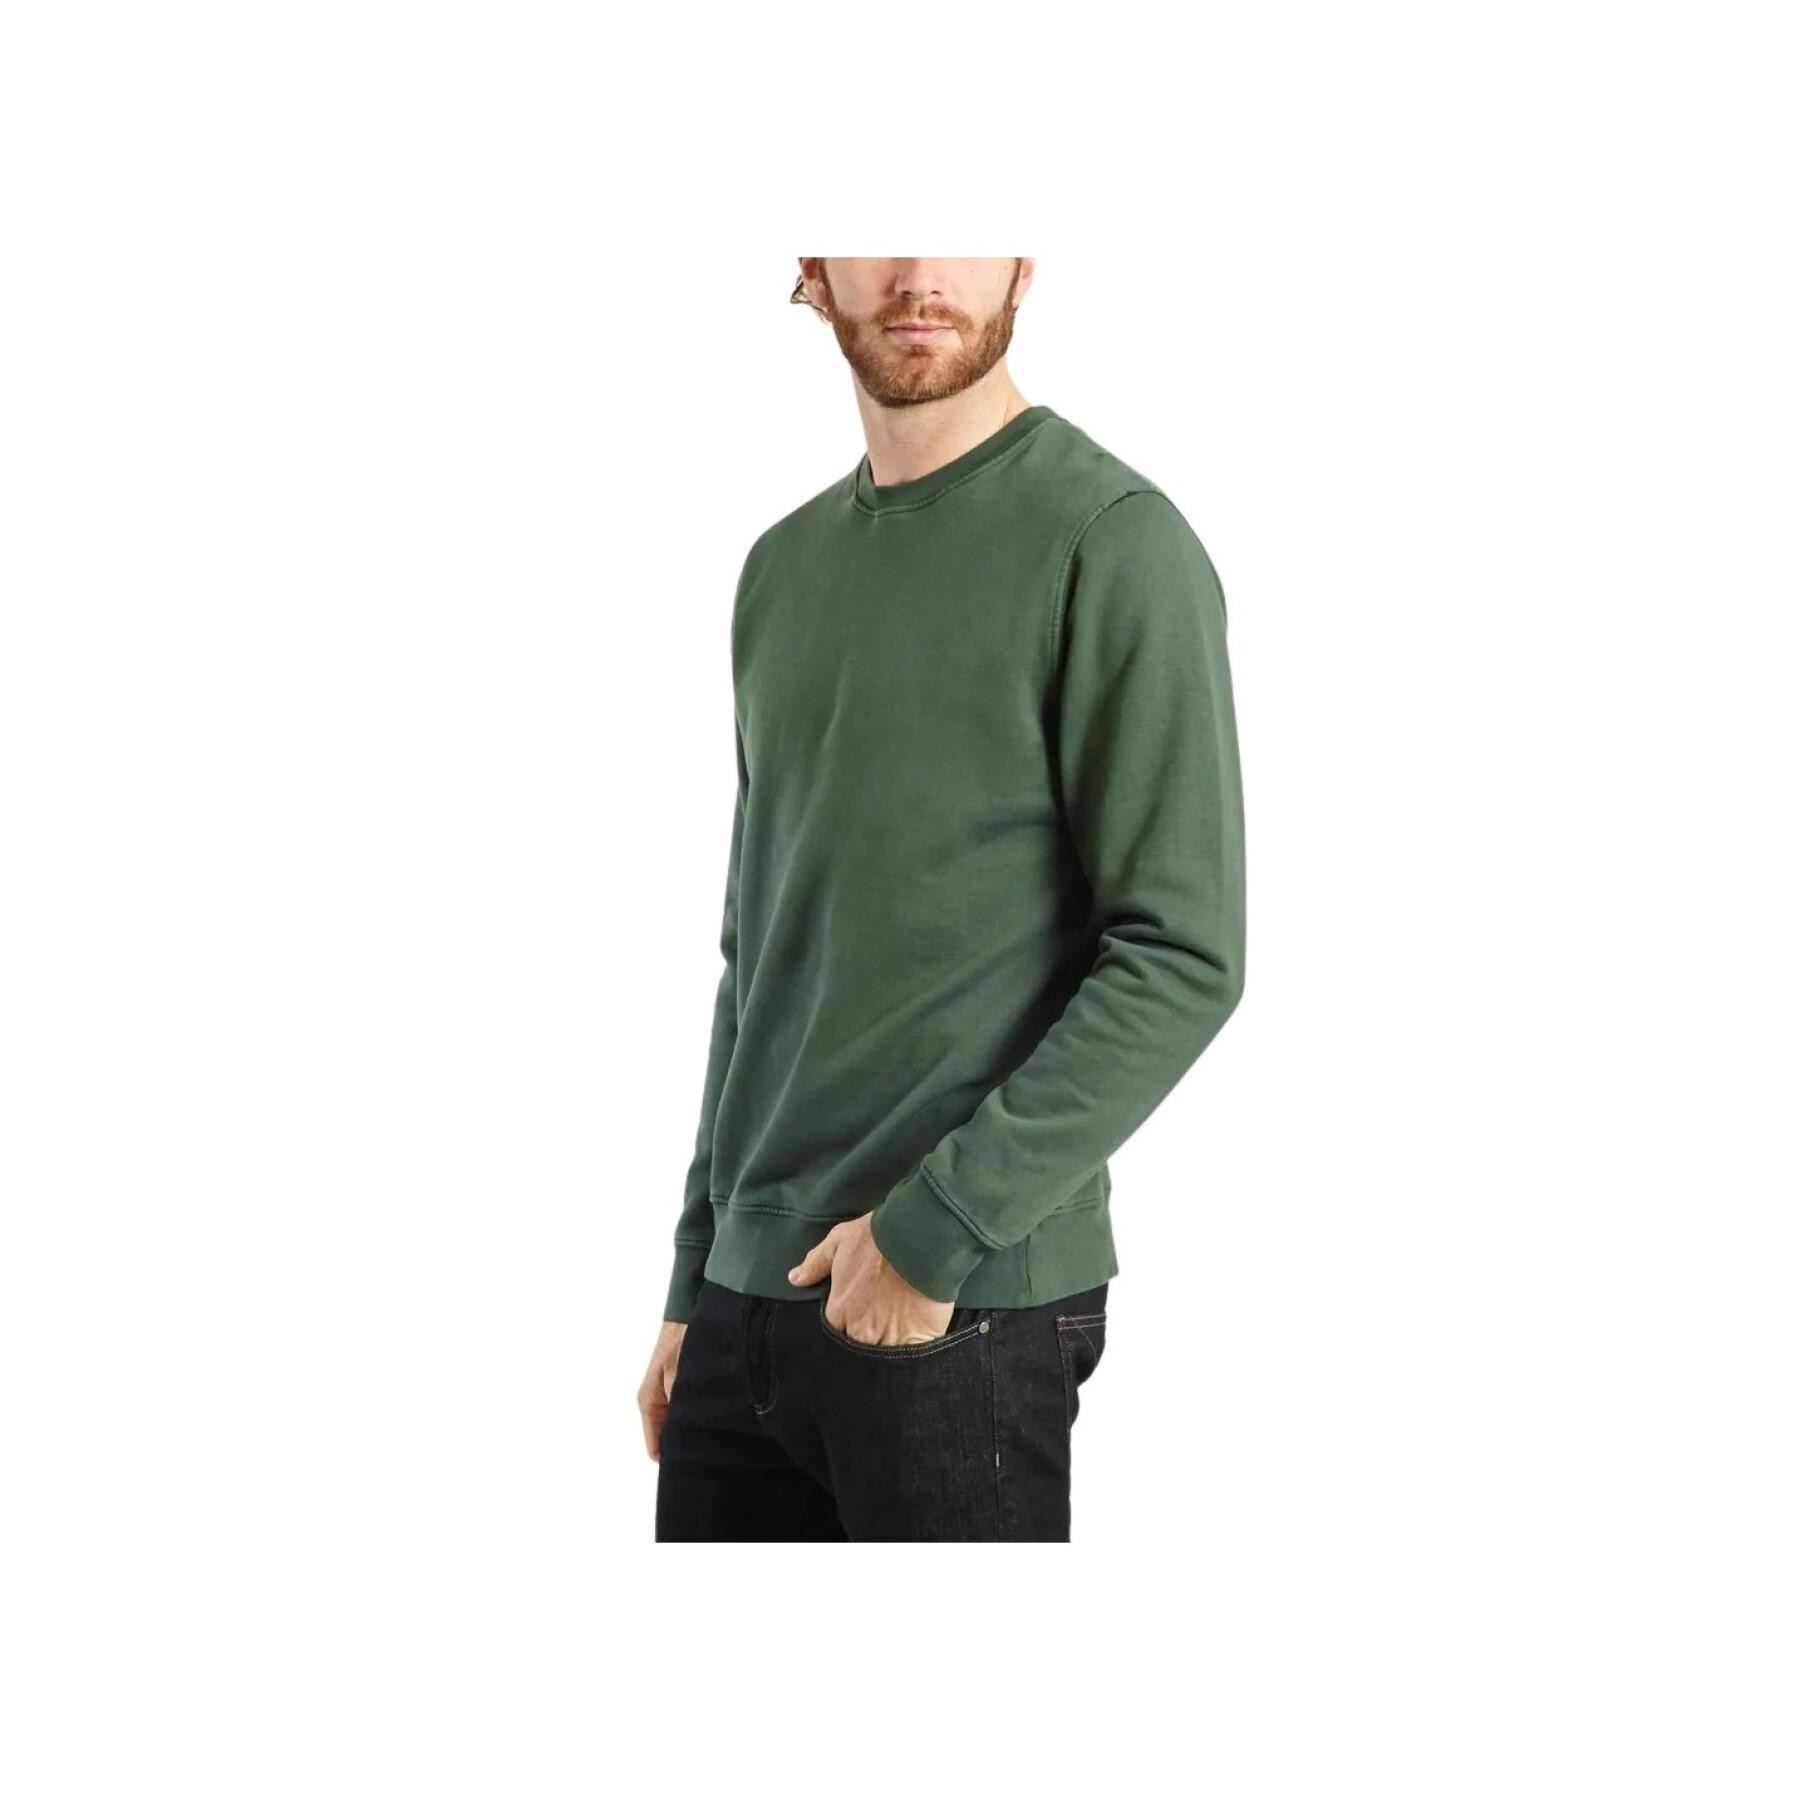 Sweatshirt col rond Colorful Standard Classic Organic emerald green